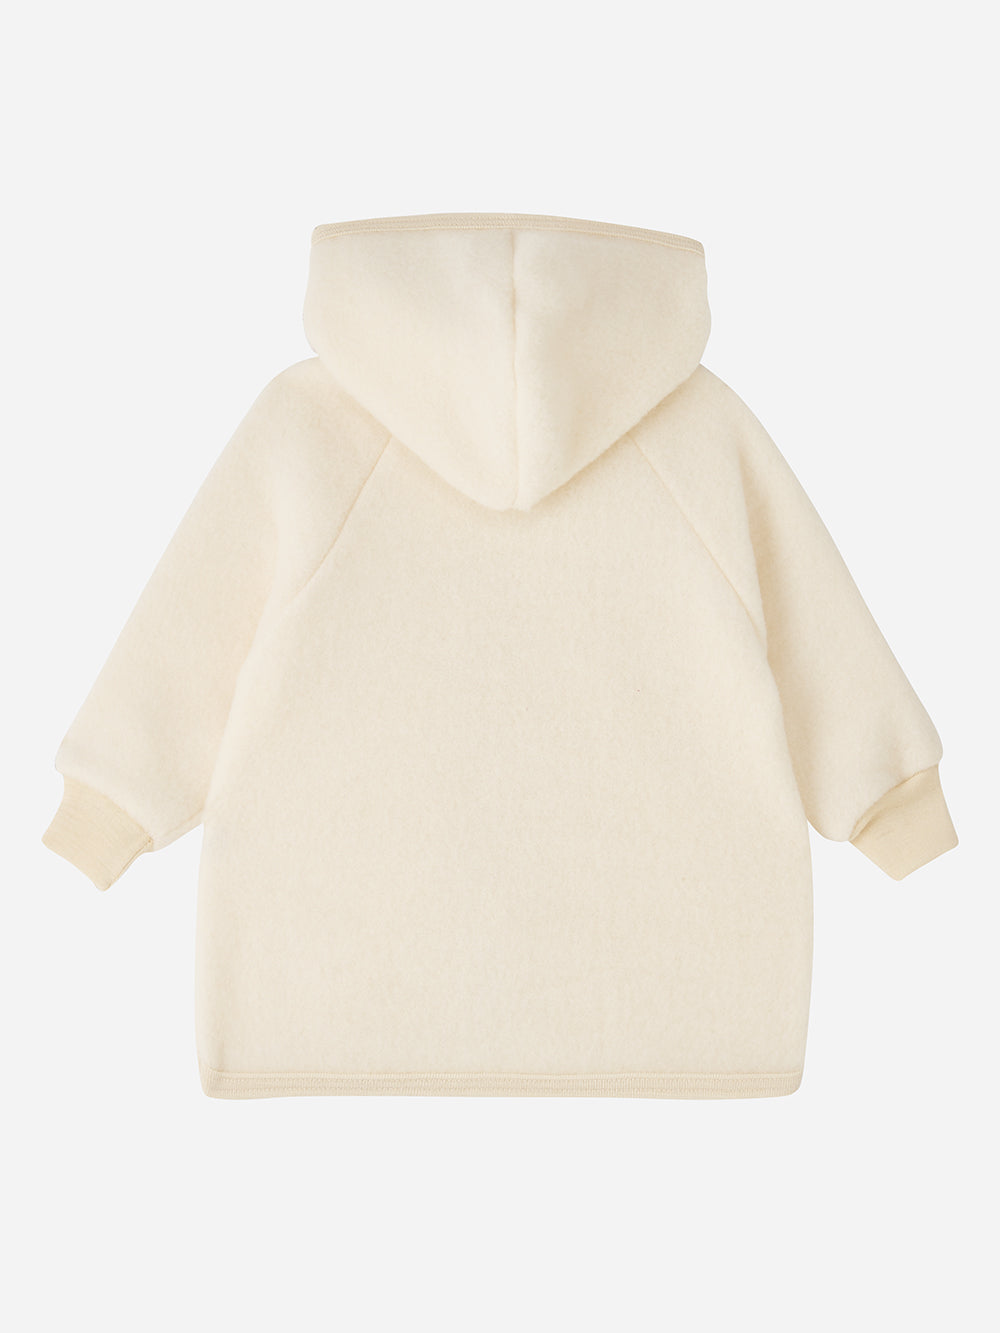 Natural Soft Fleece Baby Jacket